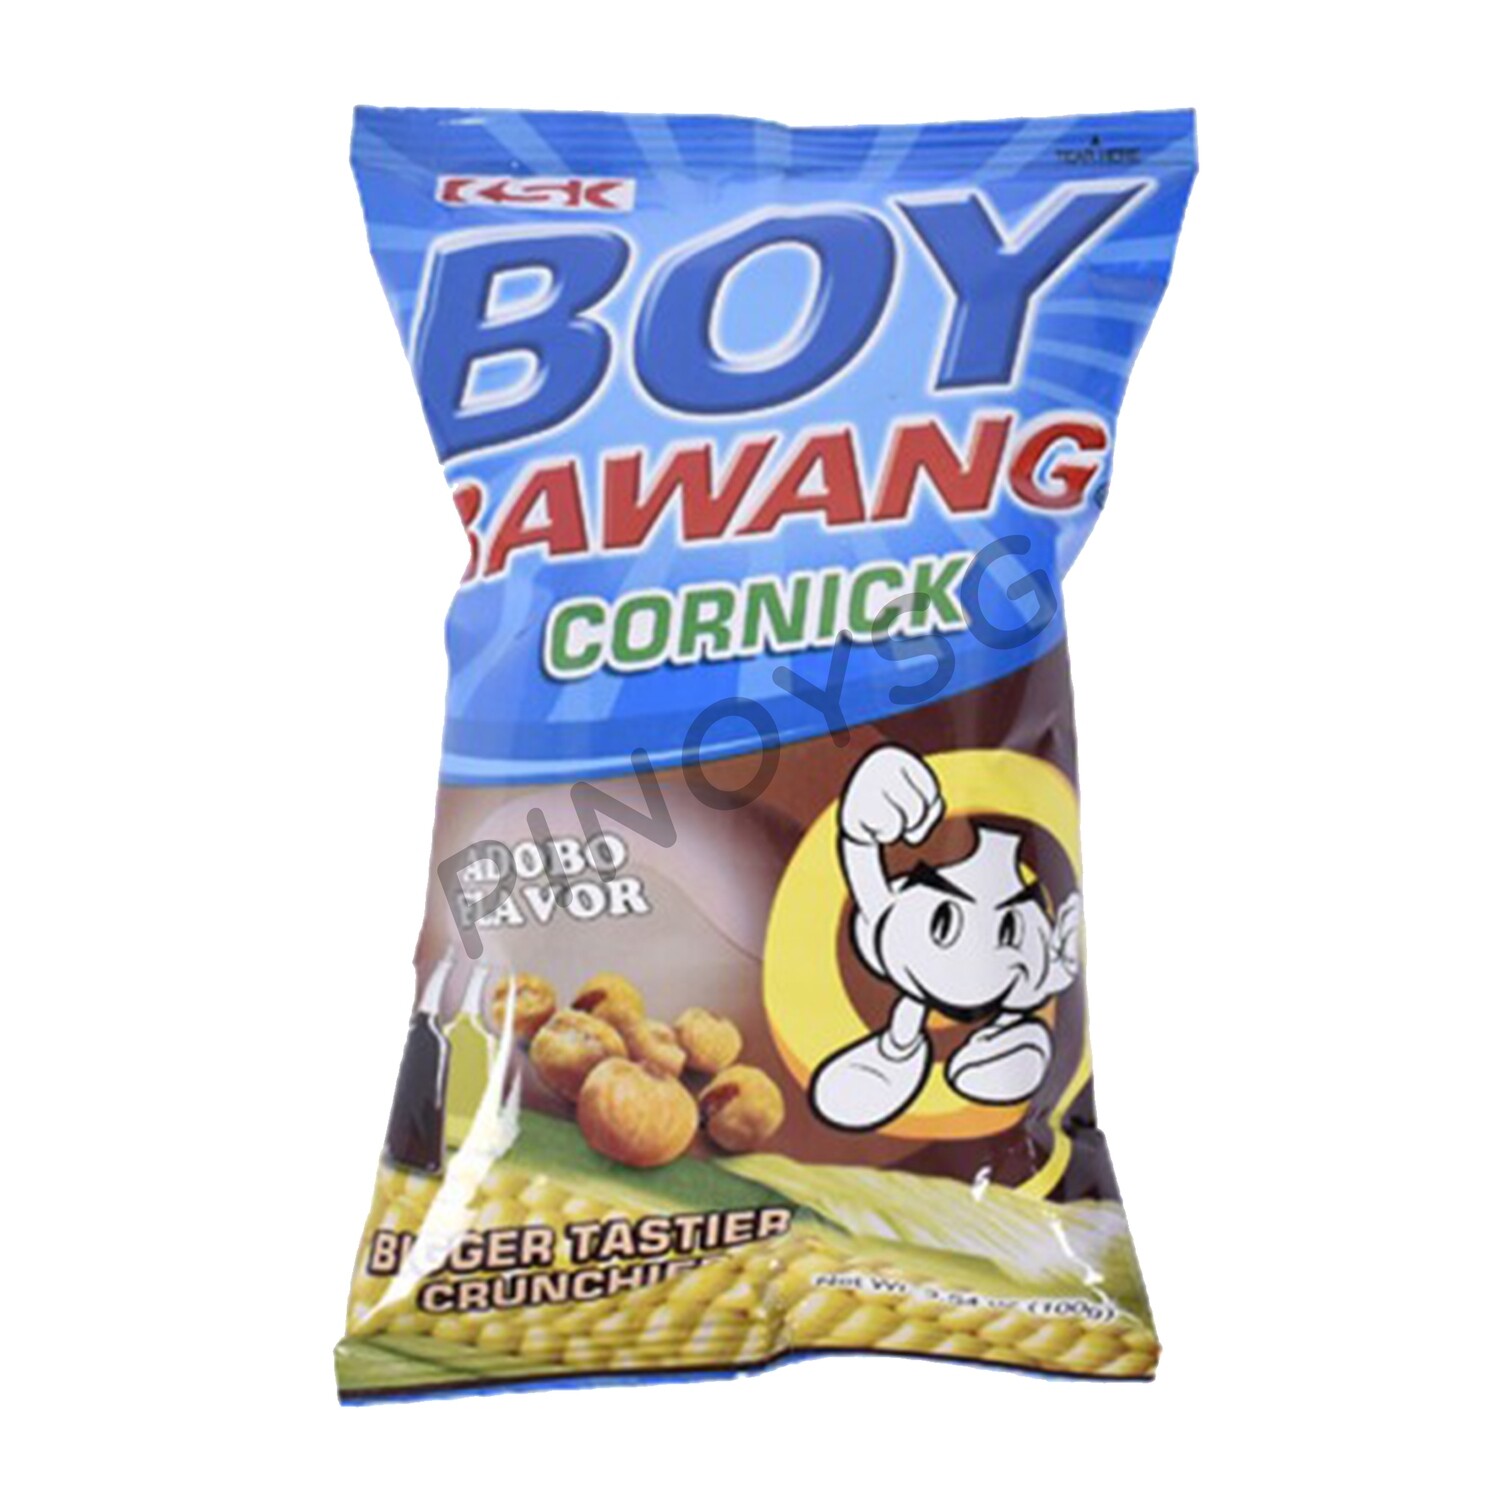 Boy Bawang Cornick Adobo Flavor 100g